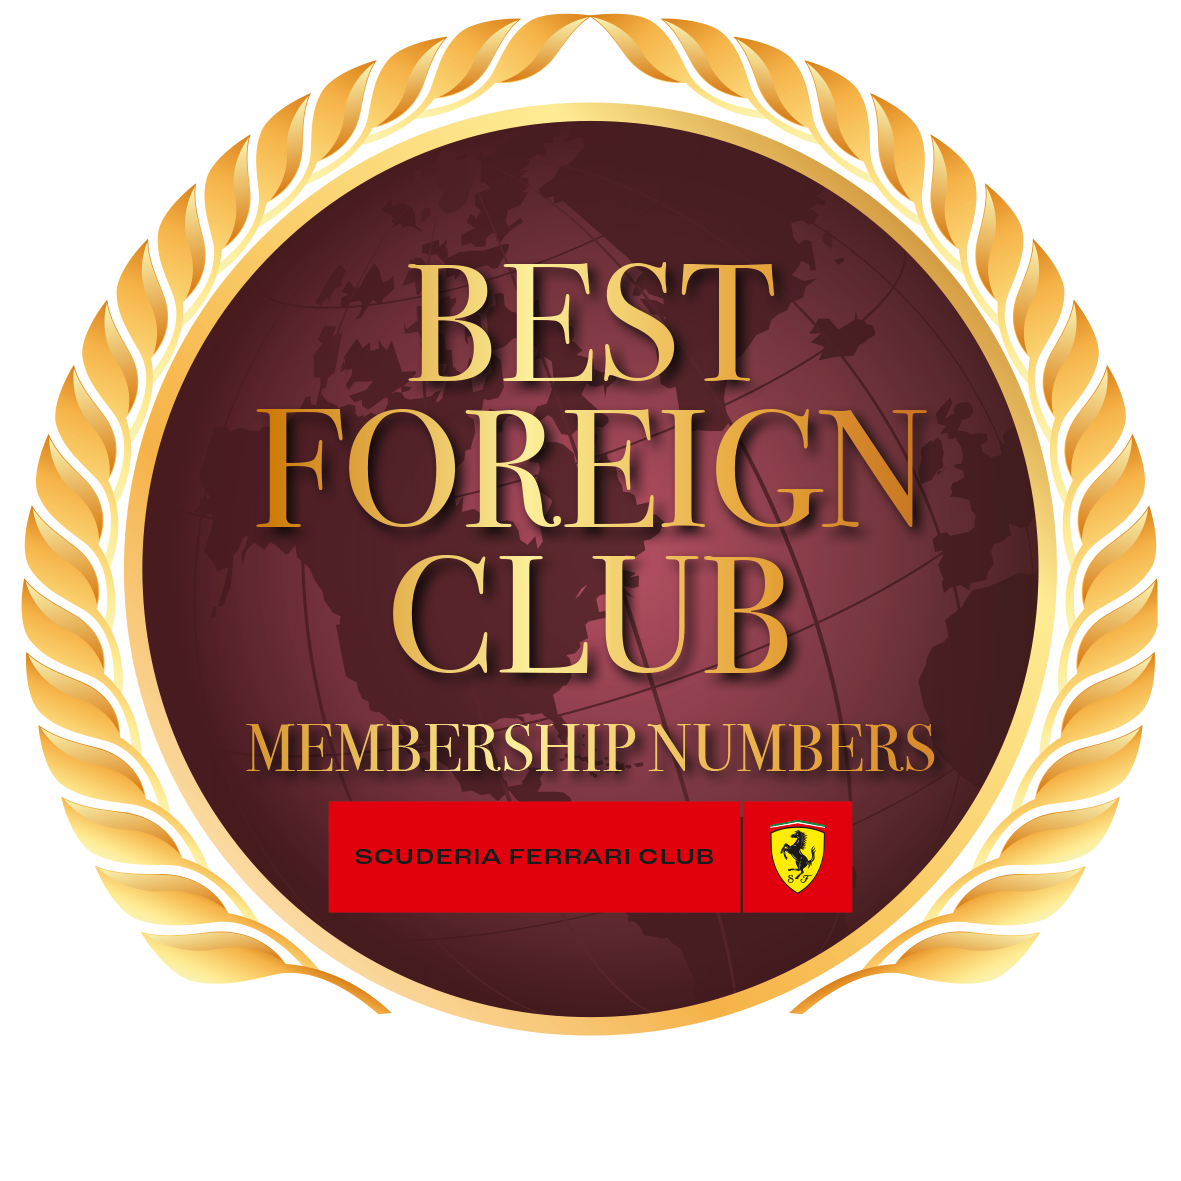 BEST FOREIGN CLUB membership numbers